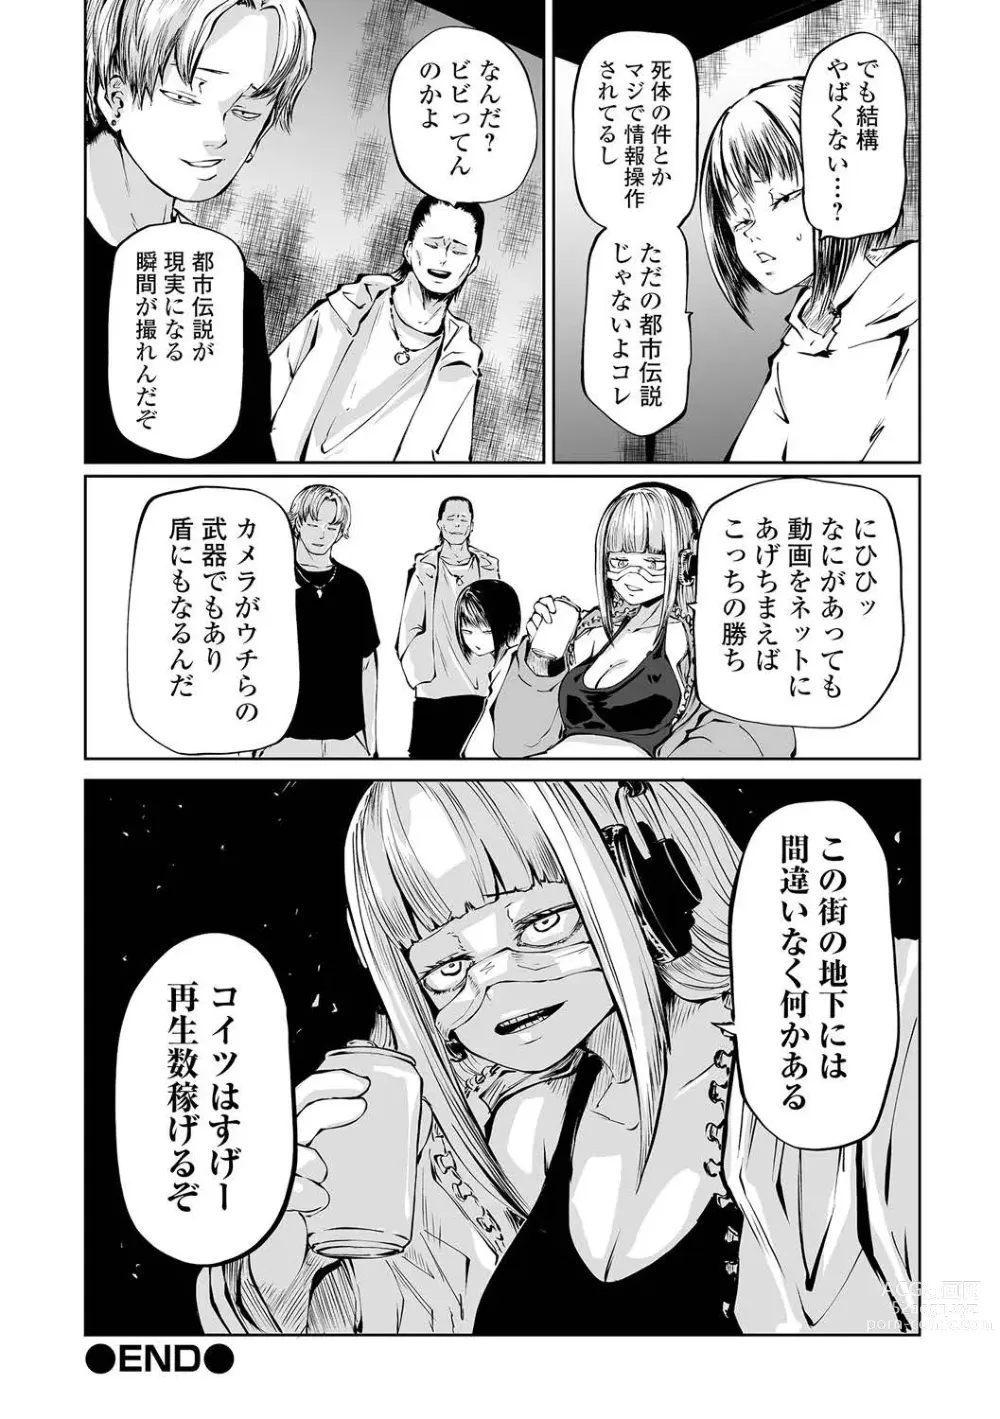 Page 108 of manga Ryona King Vol.28